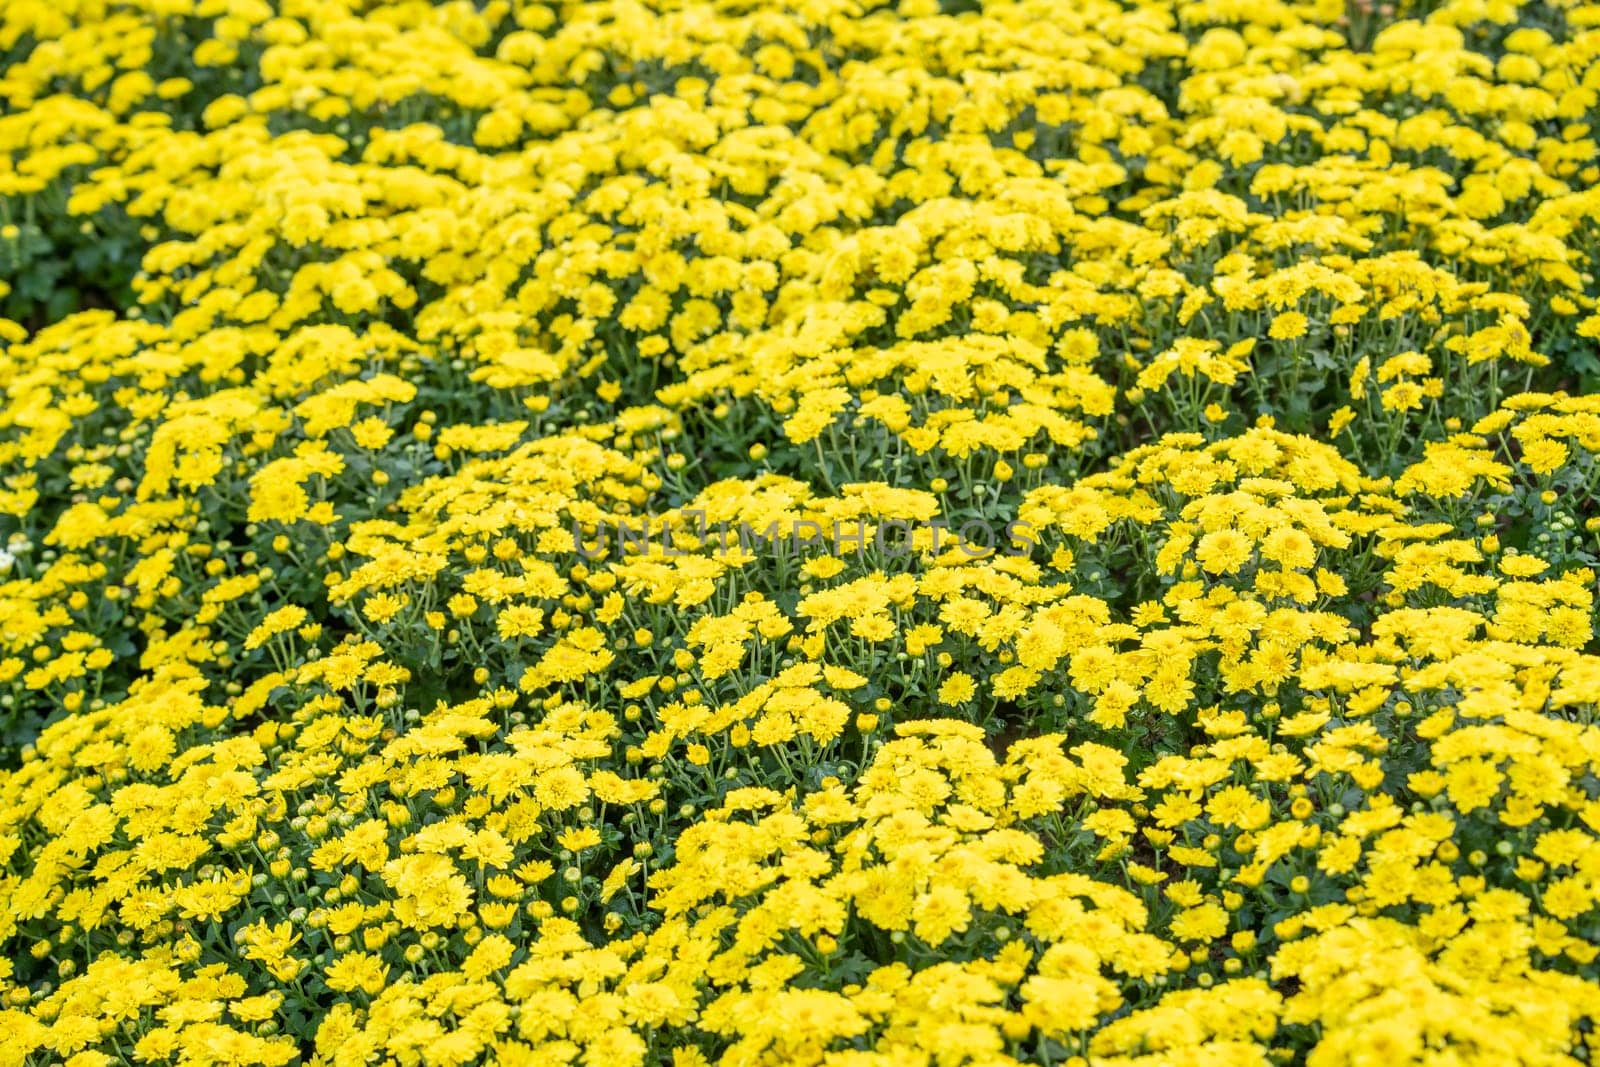 Soft Yellow Chrysanthemum flowers nature abstract background.